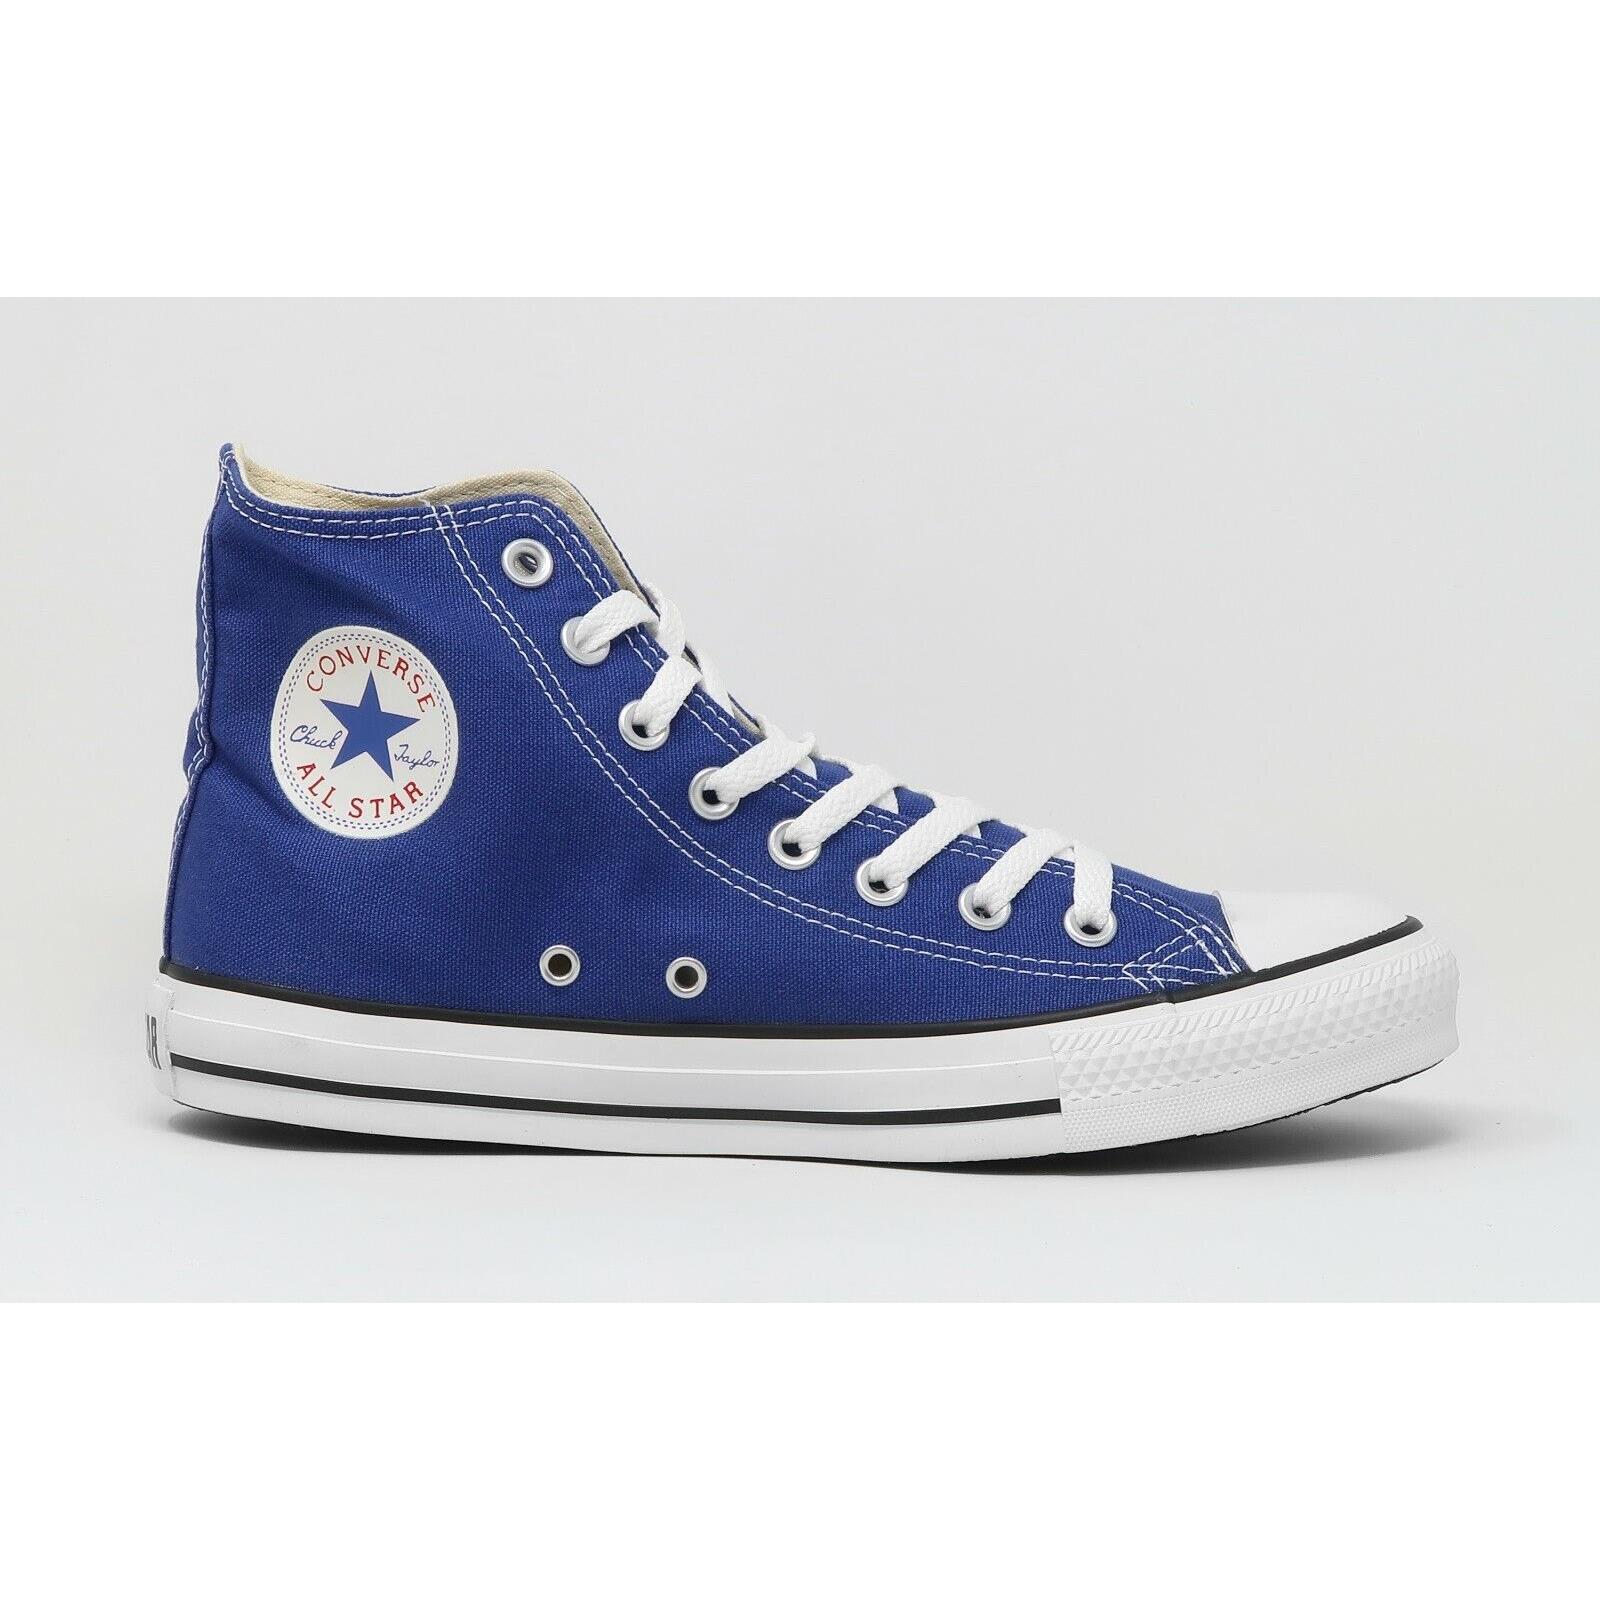 Converse All Star Hi Deep Ultrama Blue Men Women Canvas Shoes Sneakers